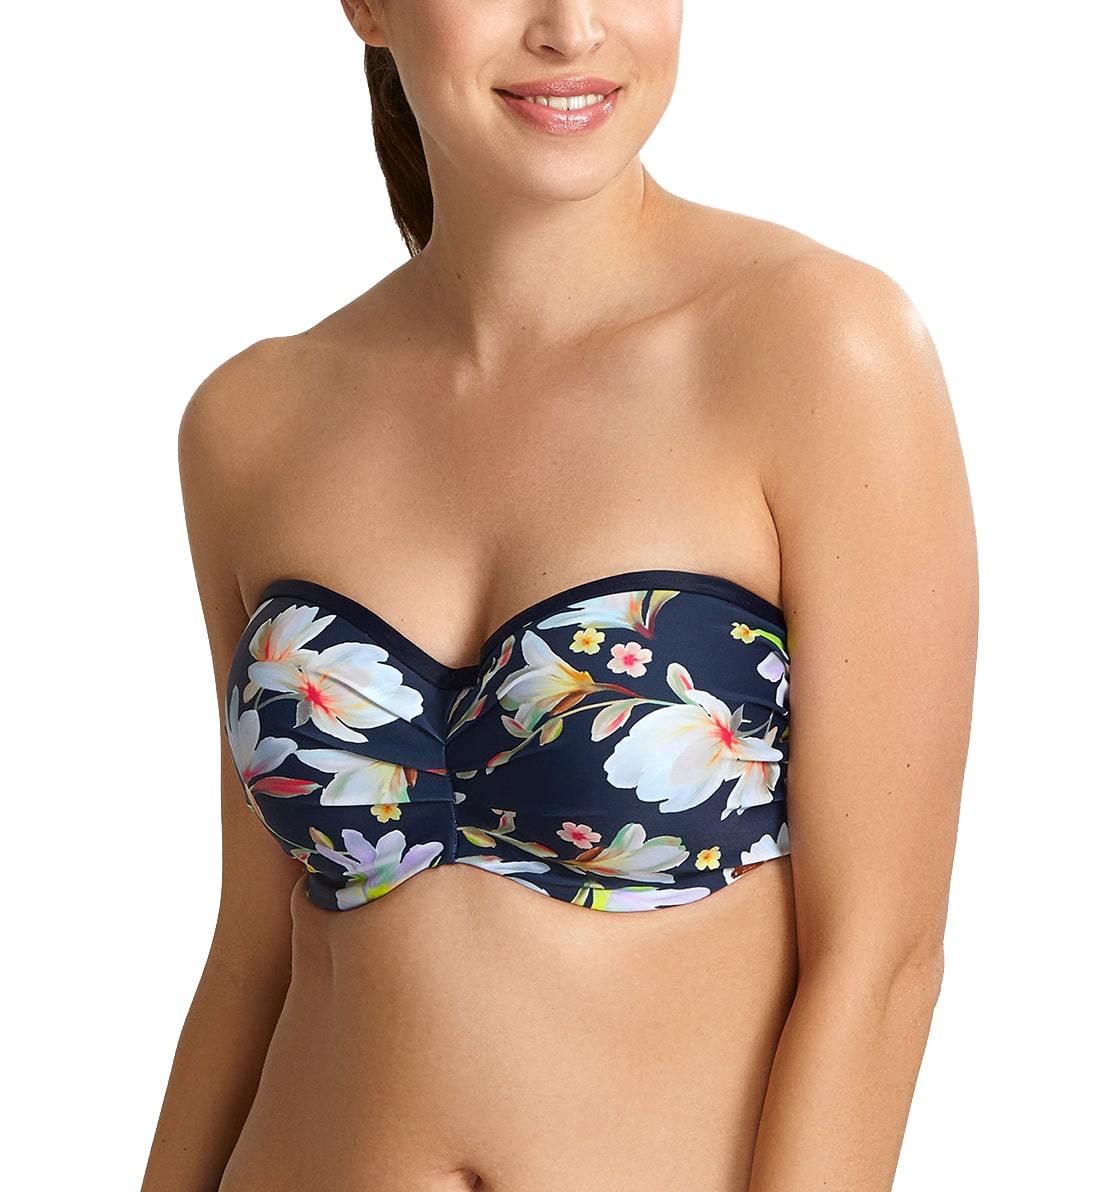 Panache Florentine Molded Bandeau Bikini Top (SW1053),30GG,Navy Floral - Navy Floral,30GG